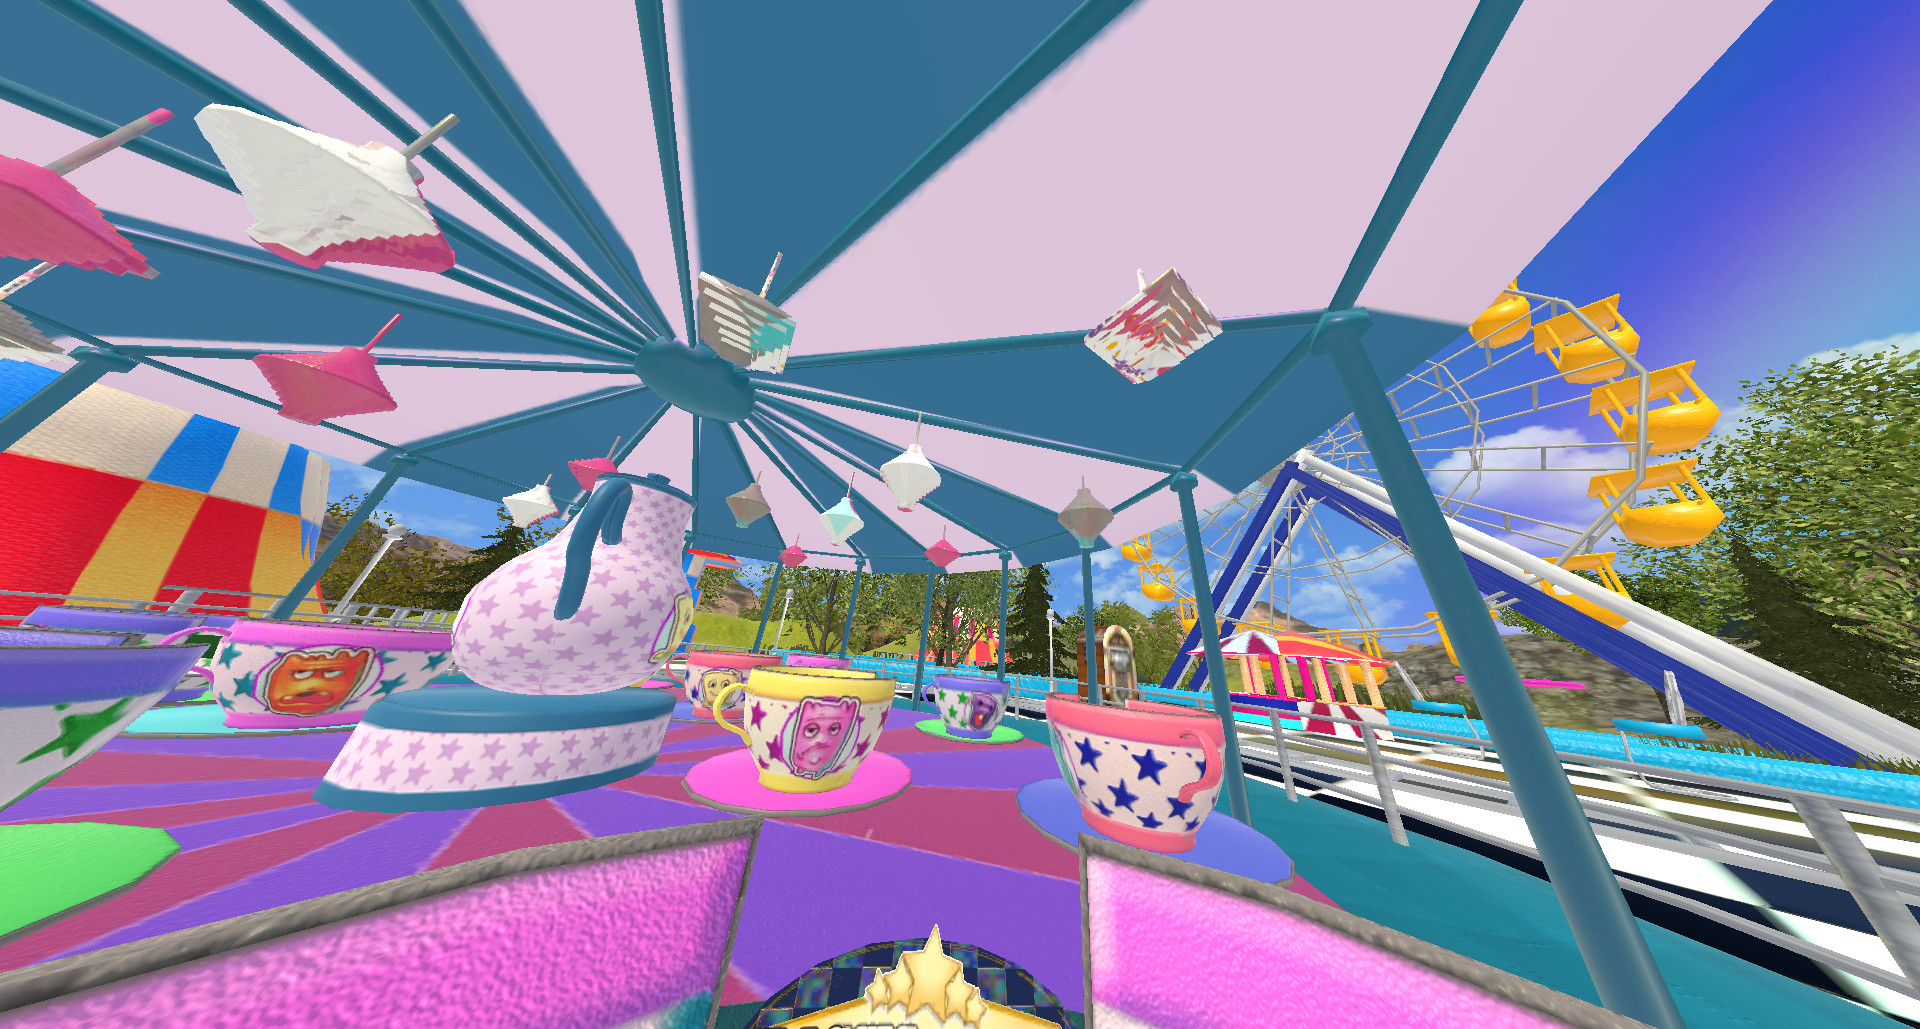 Vr riding. VR Theme Park Rides. Theme Park VR. Игра Theme Park Simulator. VR аттракцион американские горки.